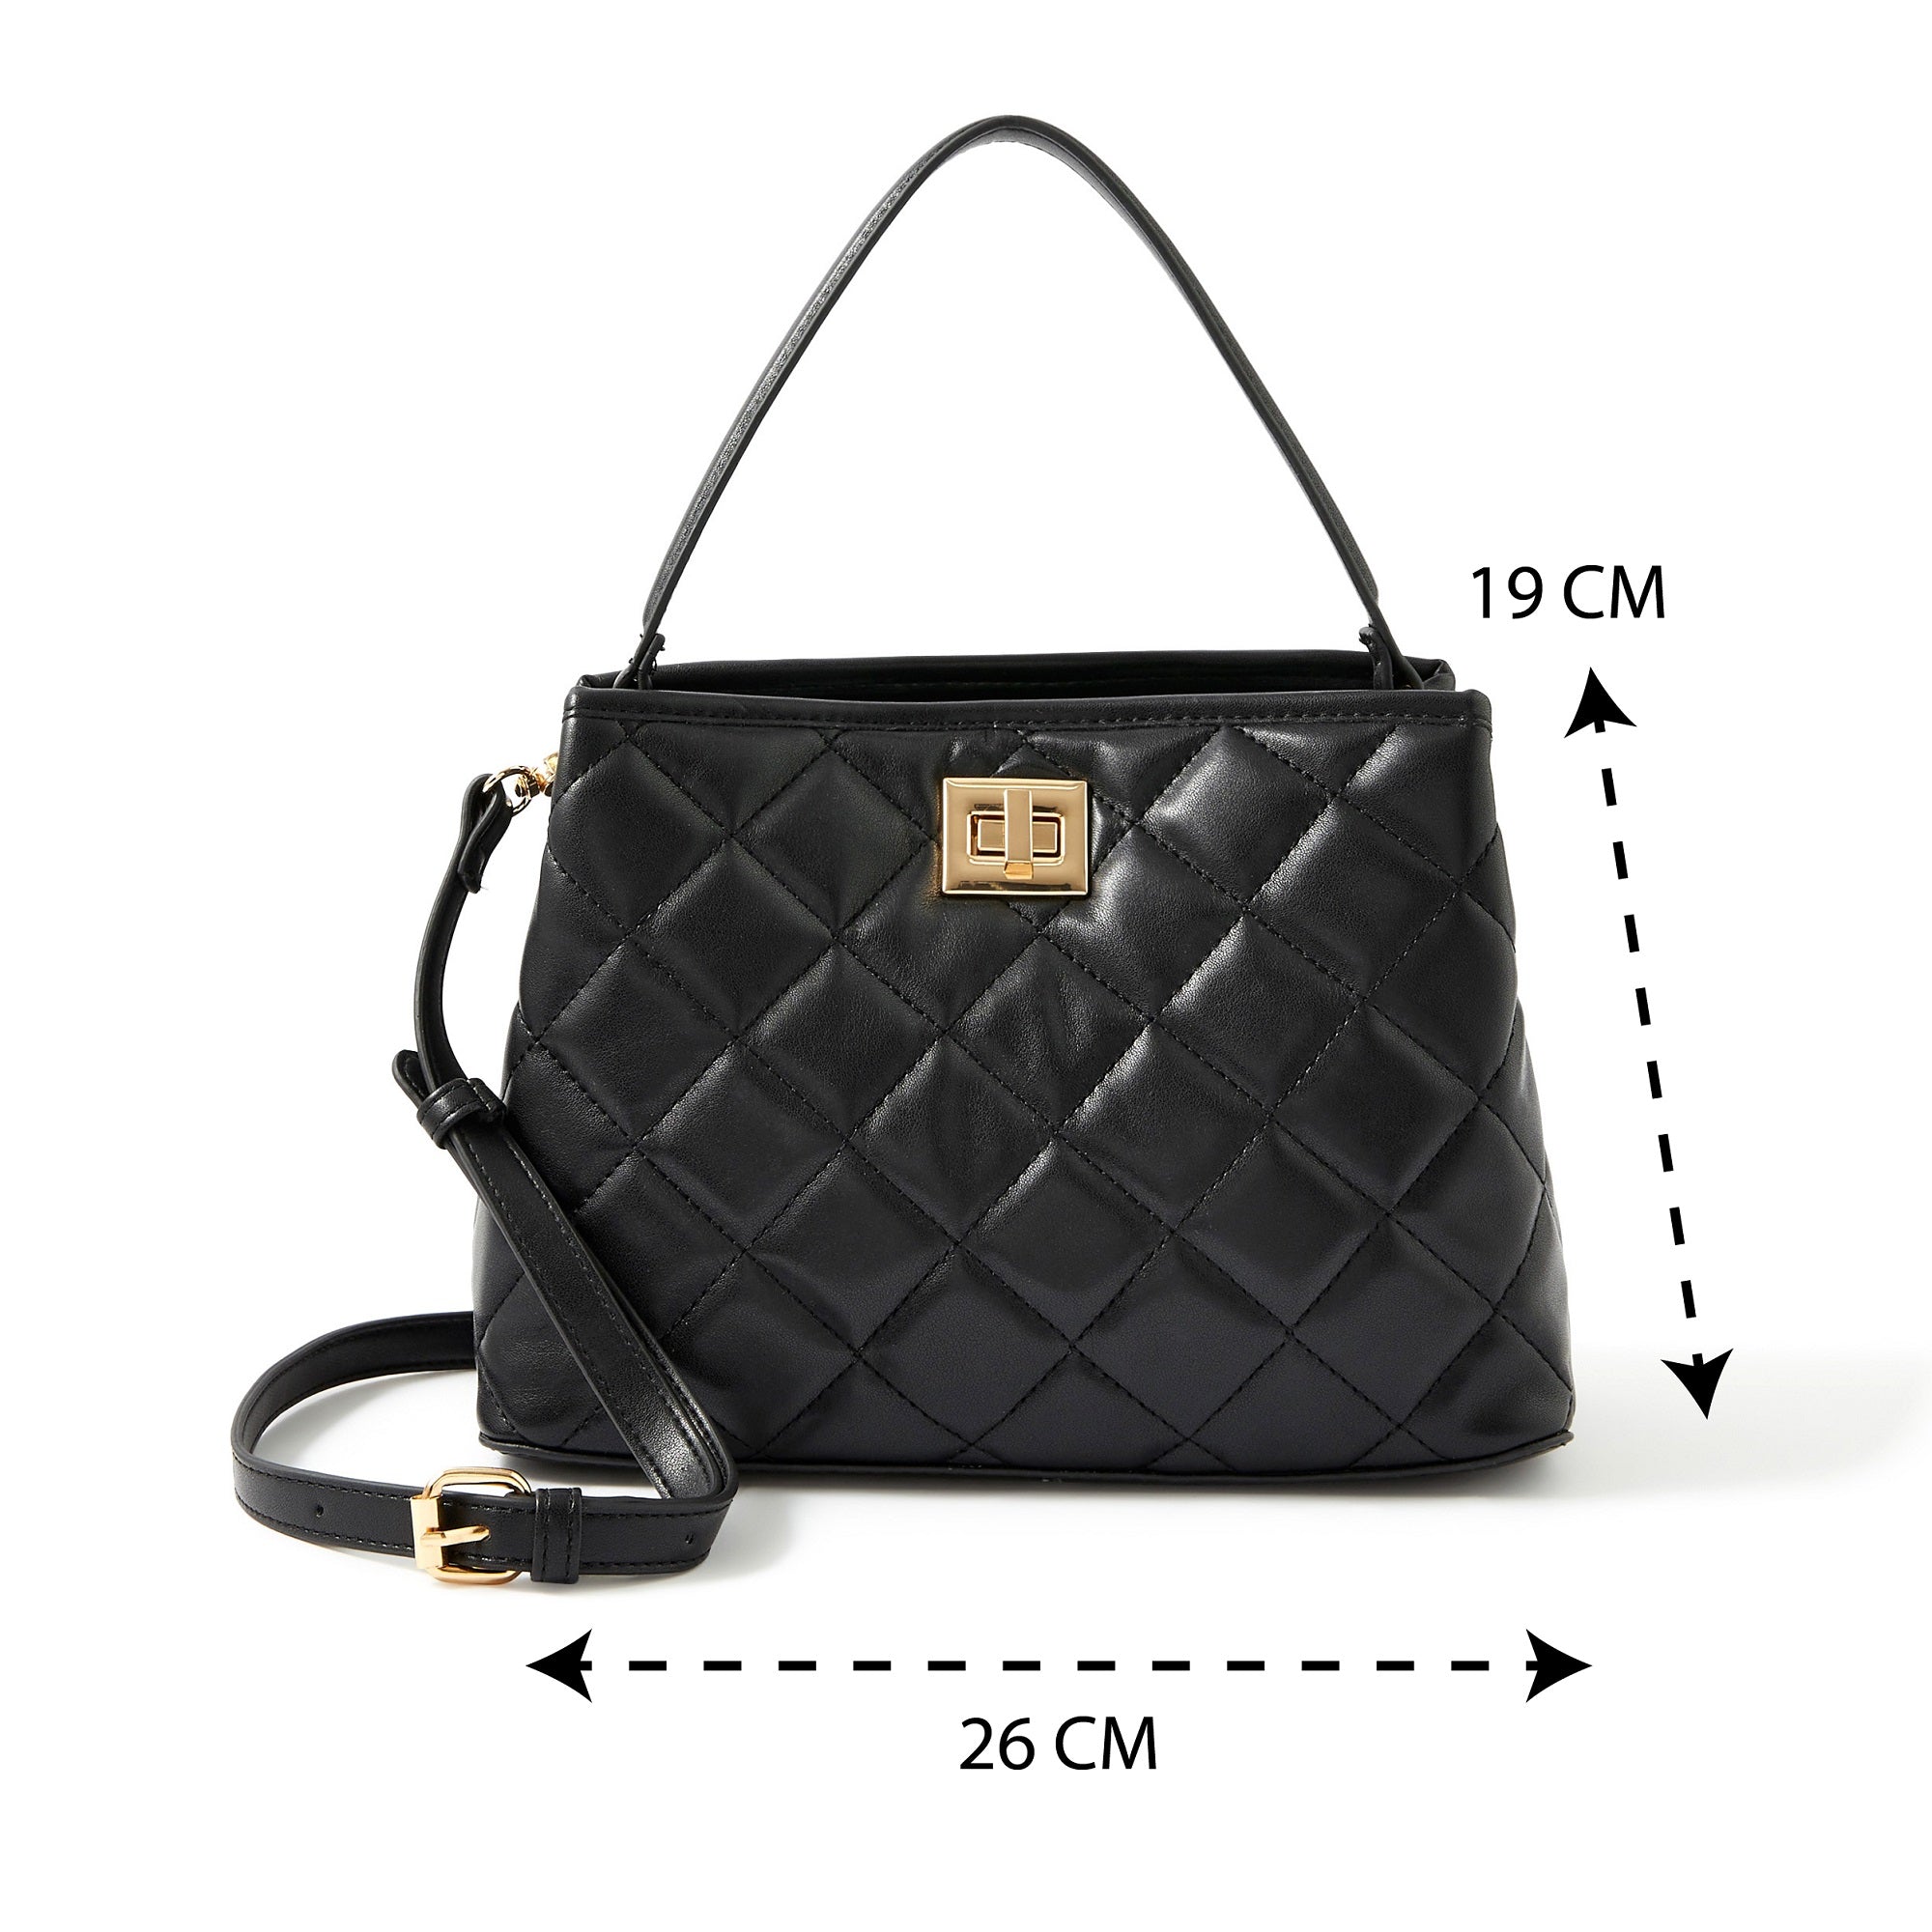 Accessorize London women's Faux Leather Black Quilted Handheld Large Satchel bag